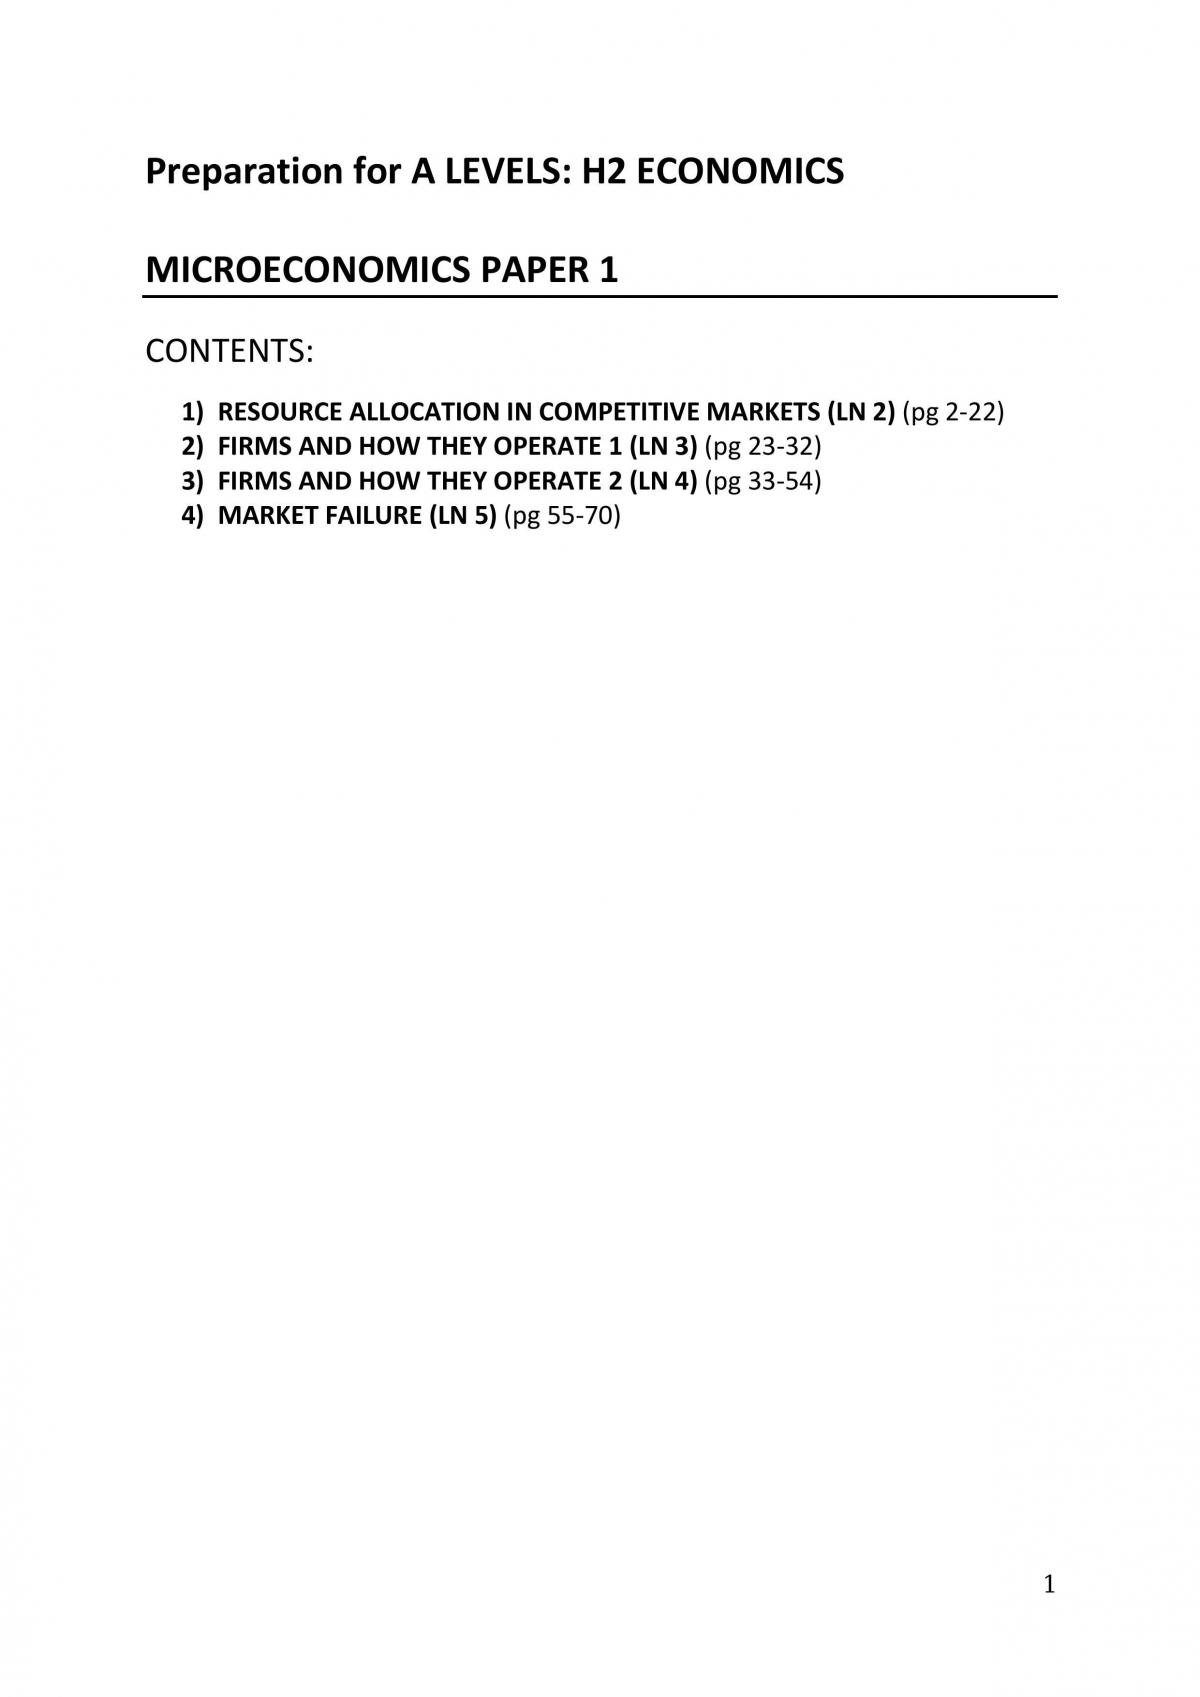 microeconomics term paper subjects